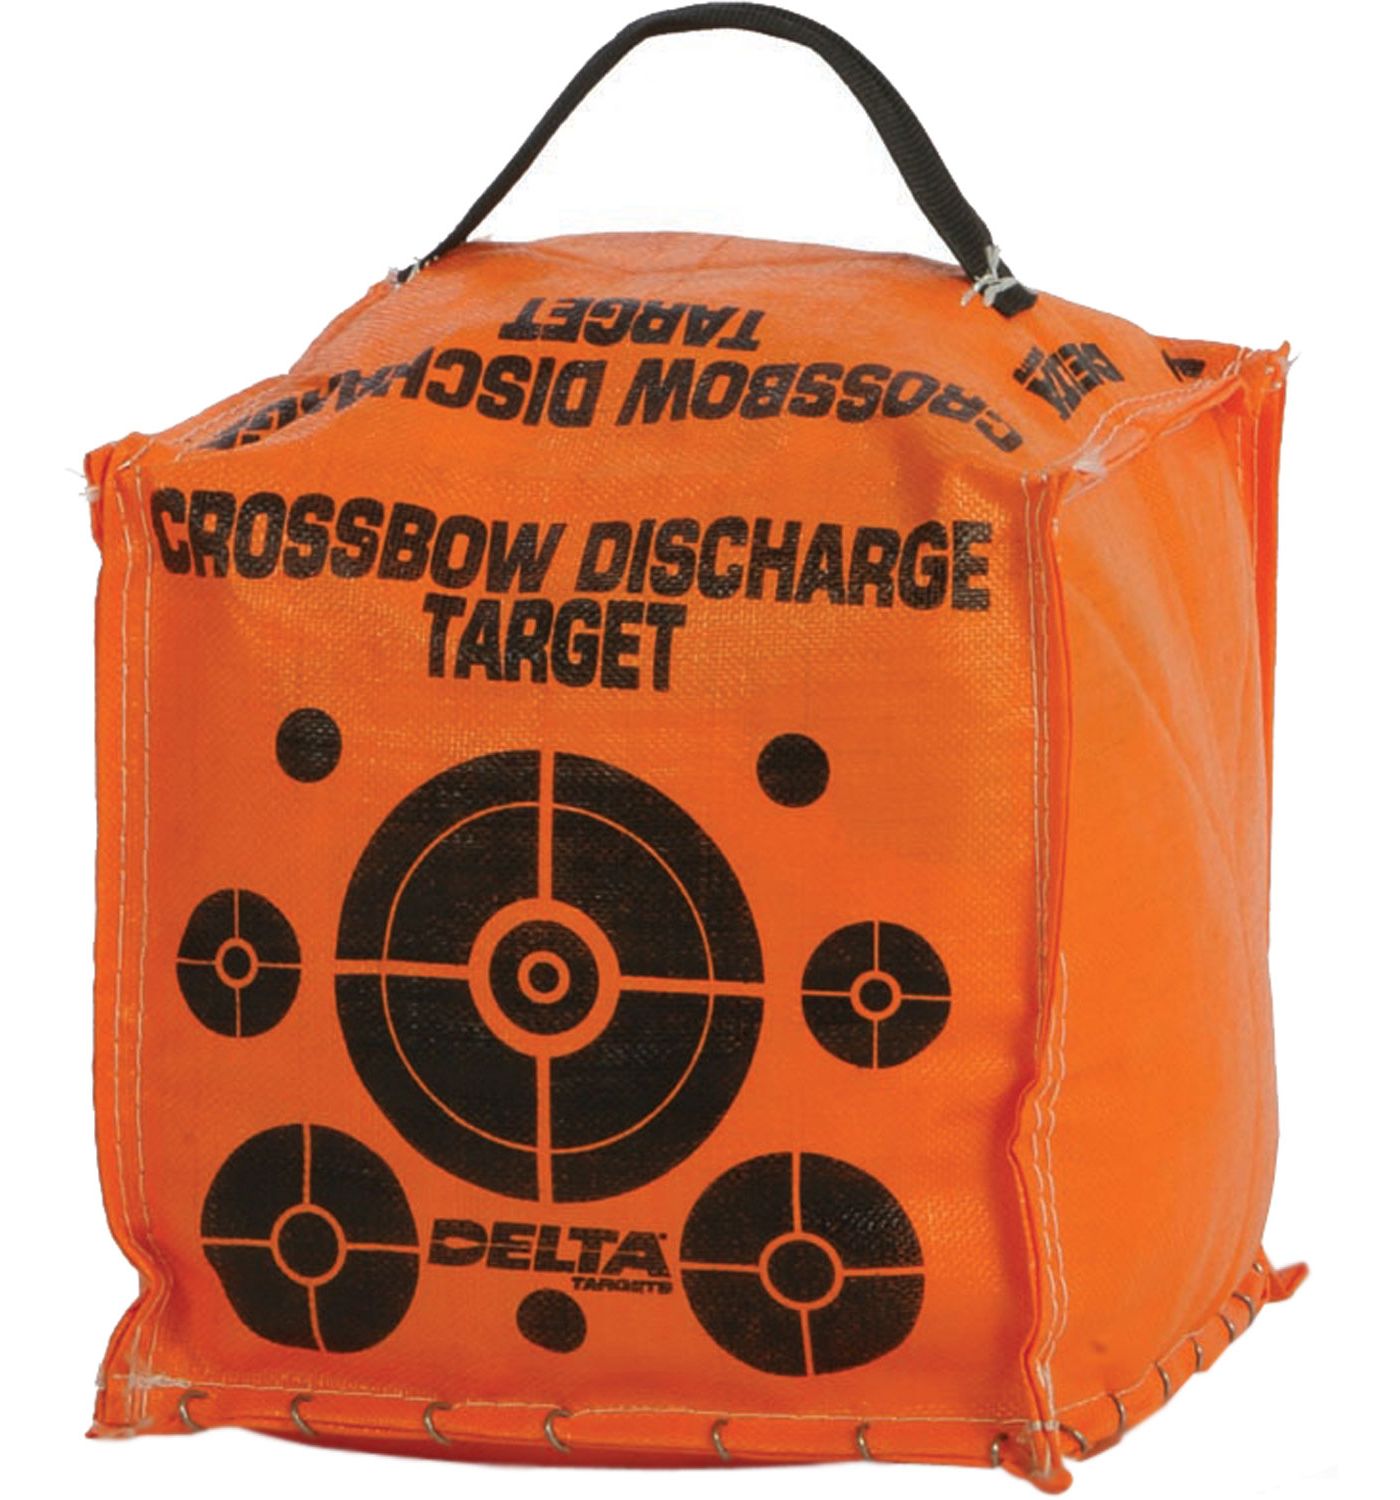 Delta McKenzie Crossbow Discharge Bag Target | Field & Stream